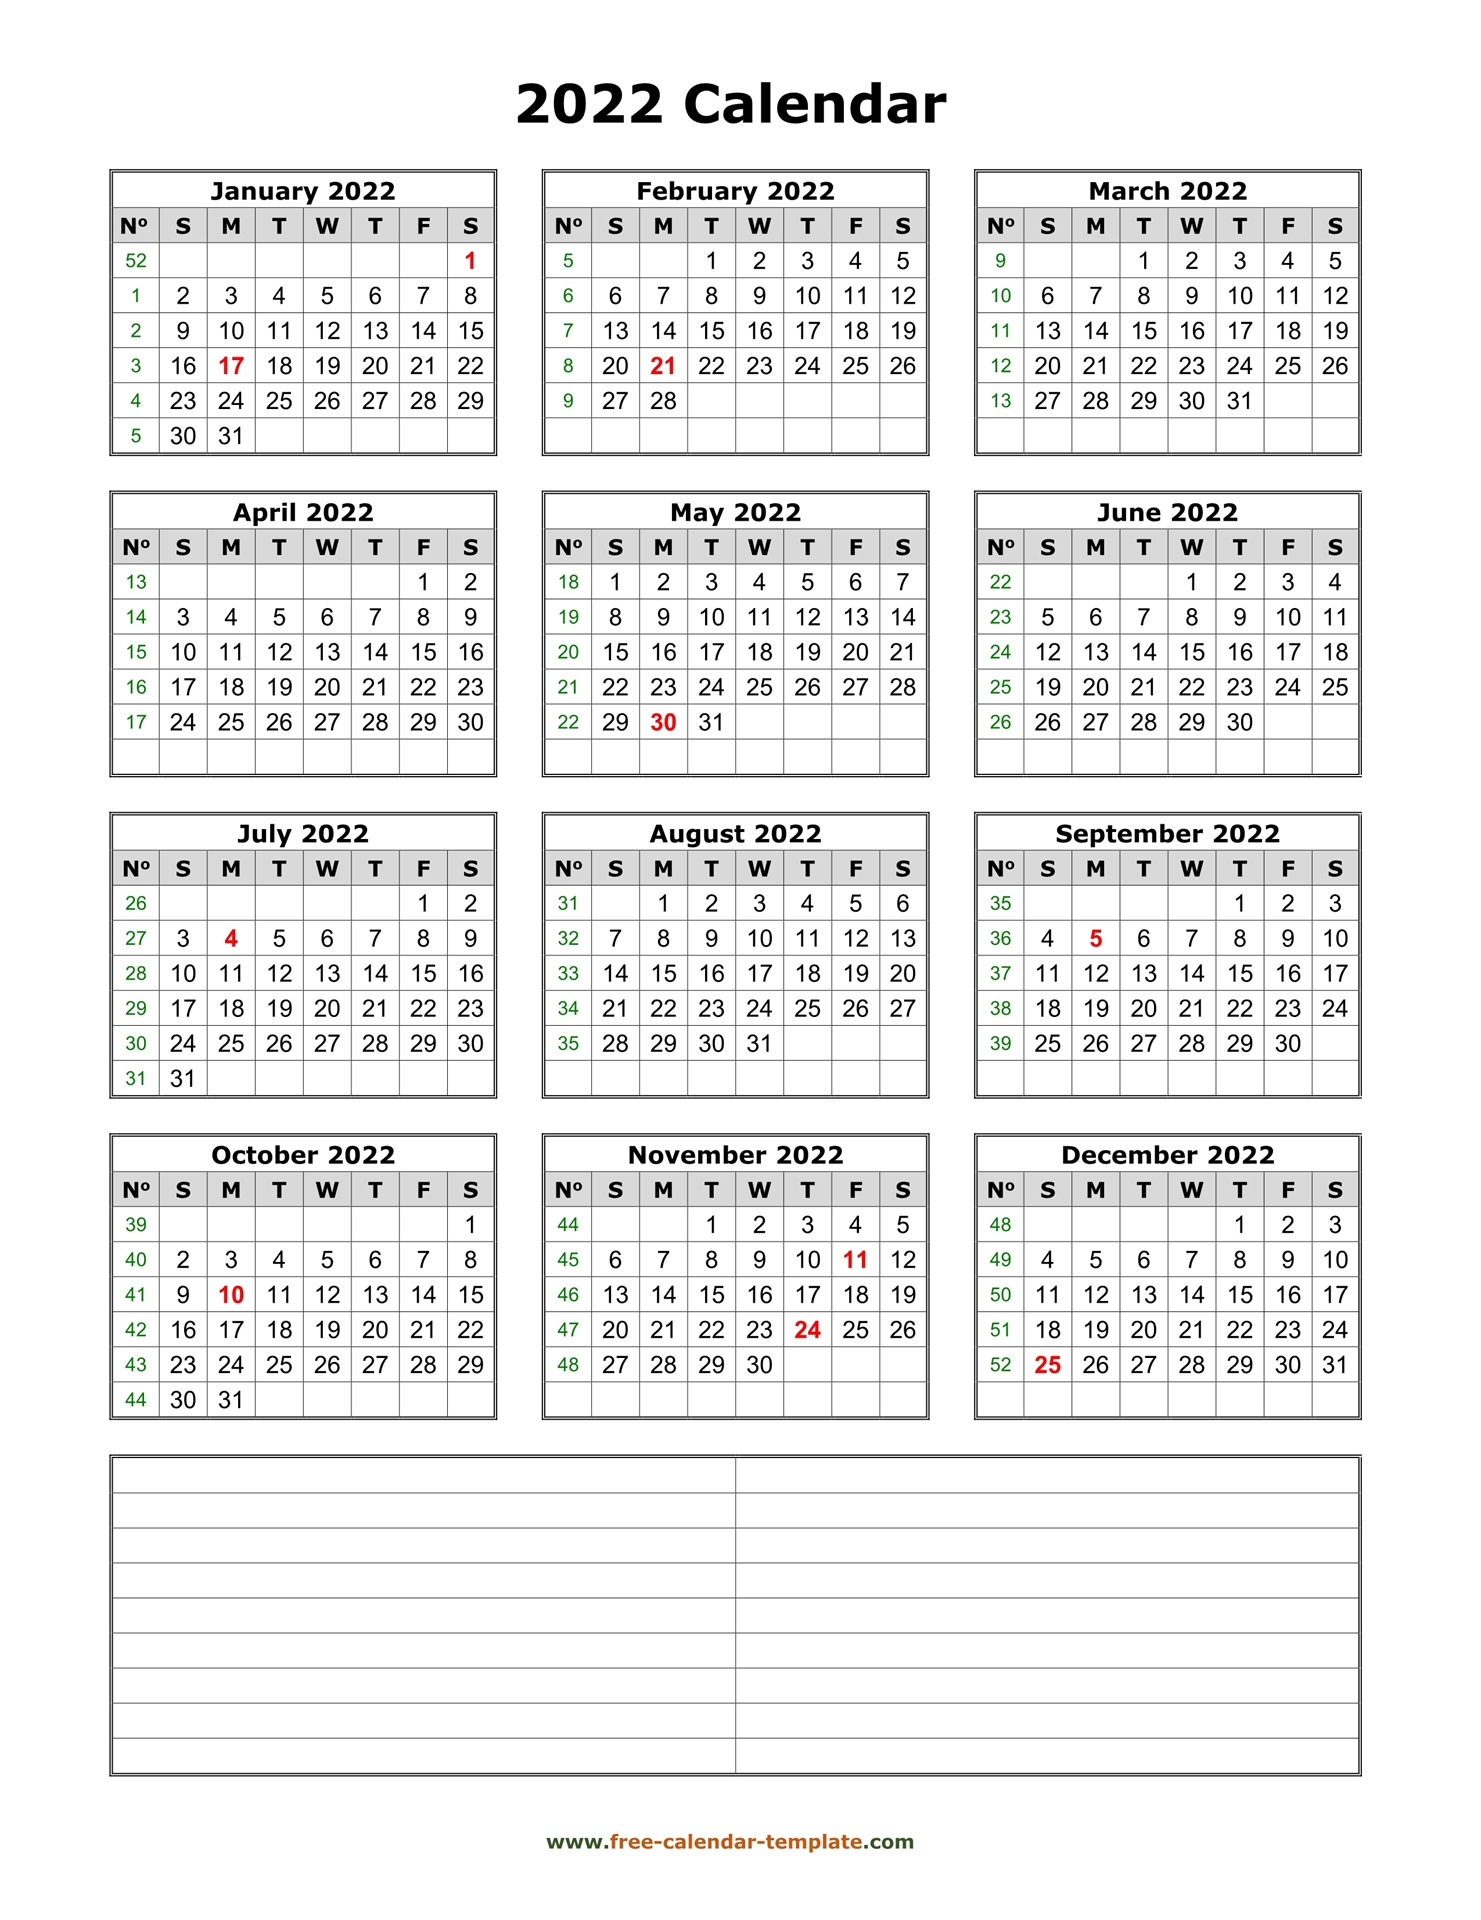 2022 Calendar Printable One Page - 2022 Calendar Templates